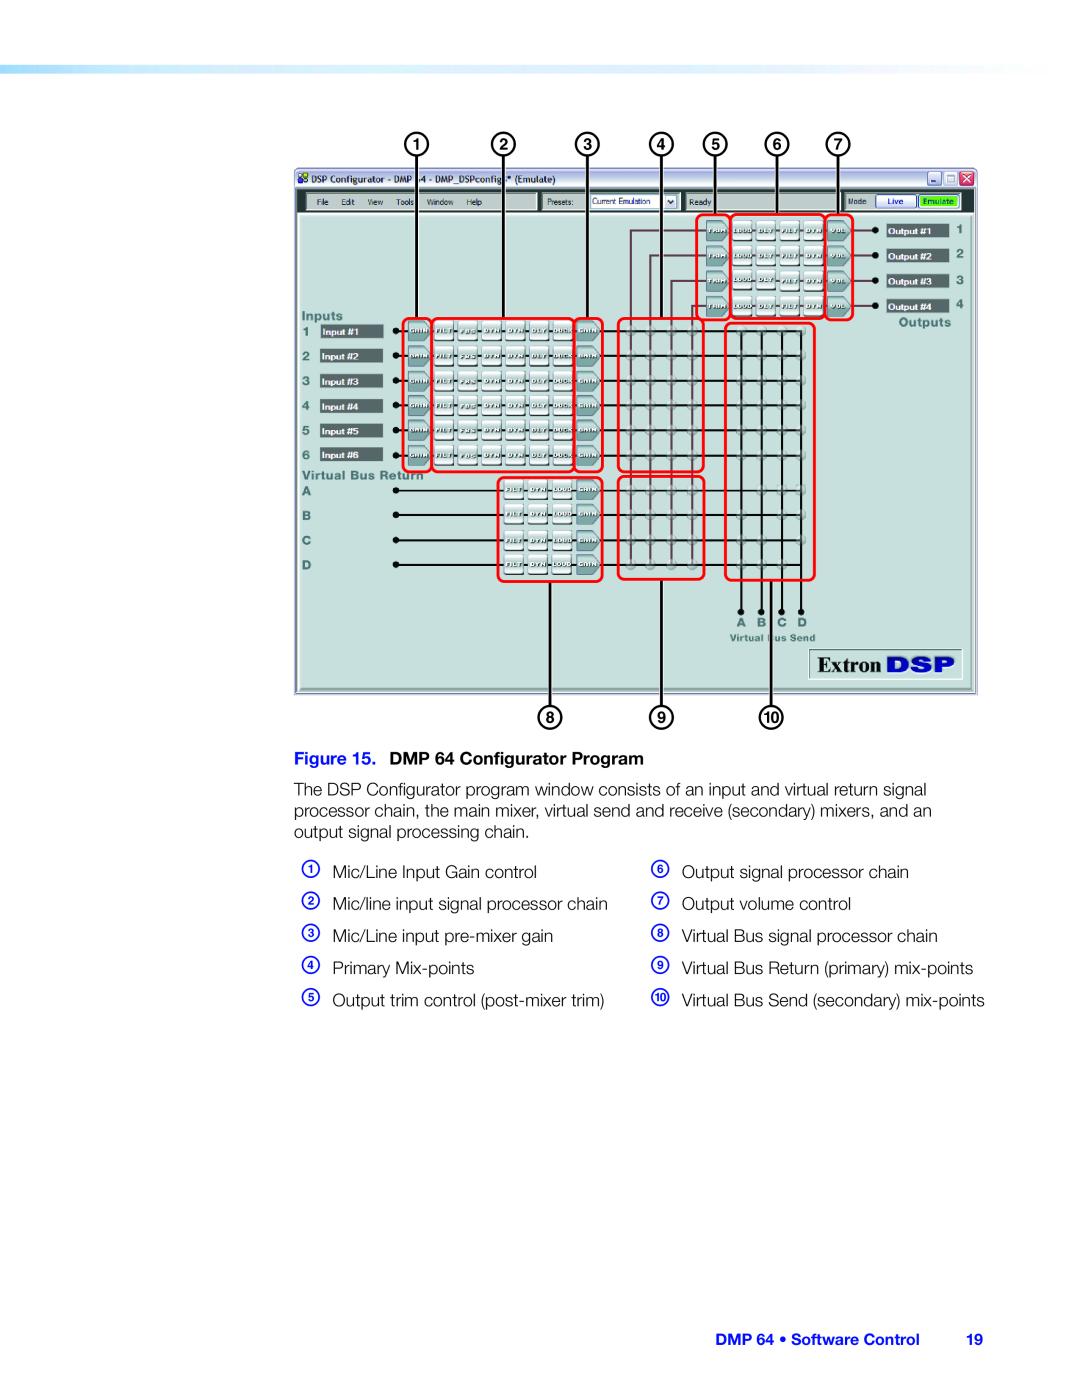 Extron electronic manual a b c d e f g h i j, DMP 64 Configurator Program 